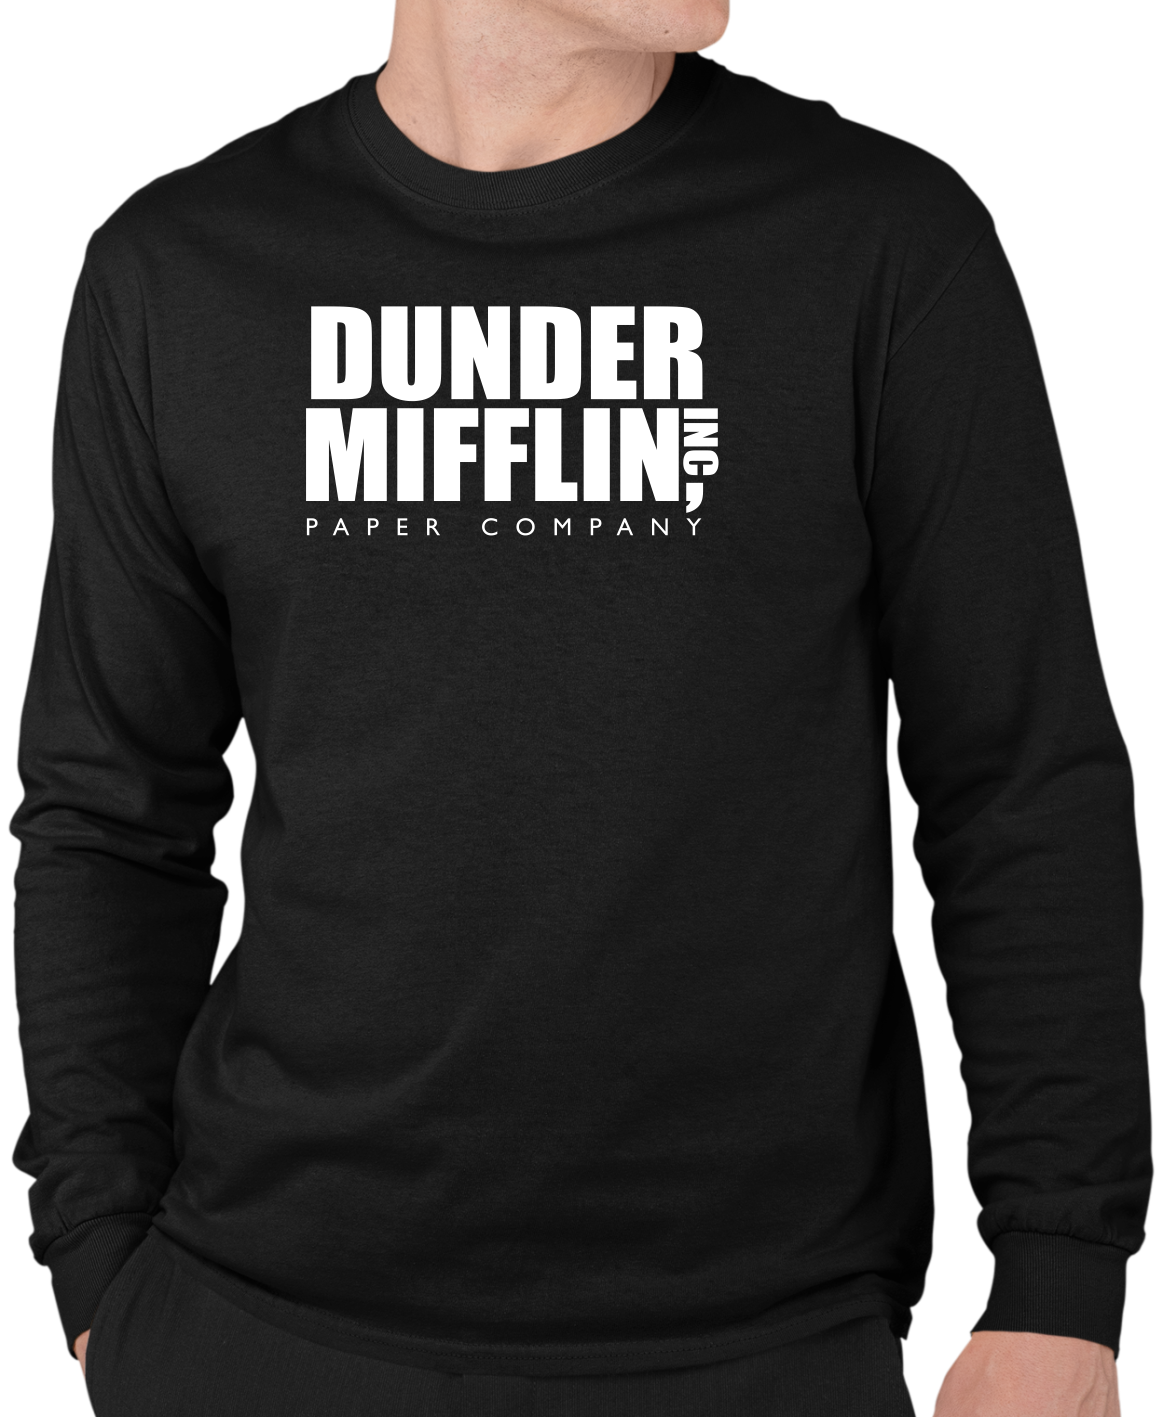 Camiseta Raglan Mescla Adulto Masculina, Dunder mifflin paper company